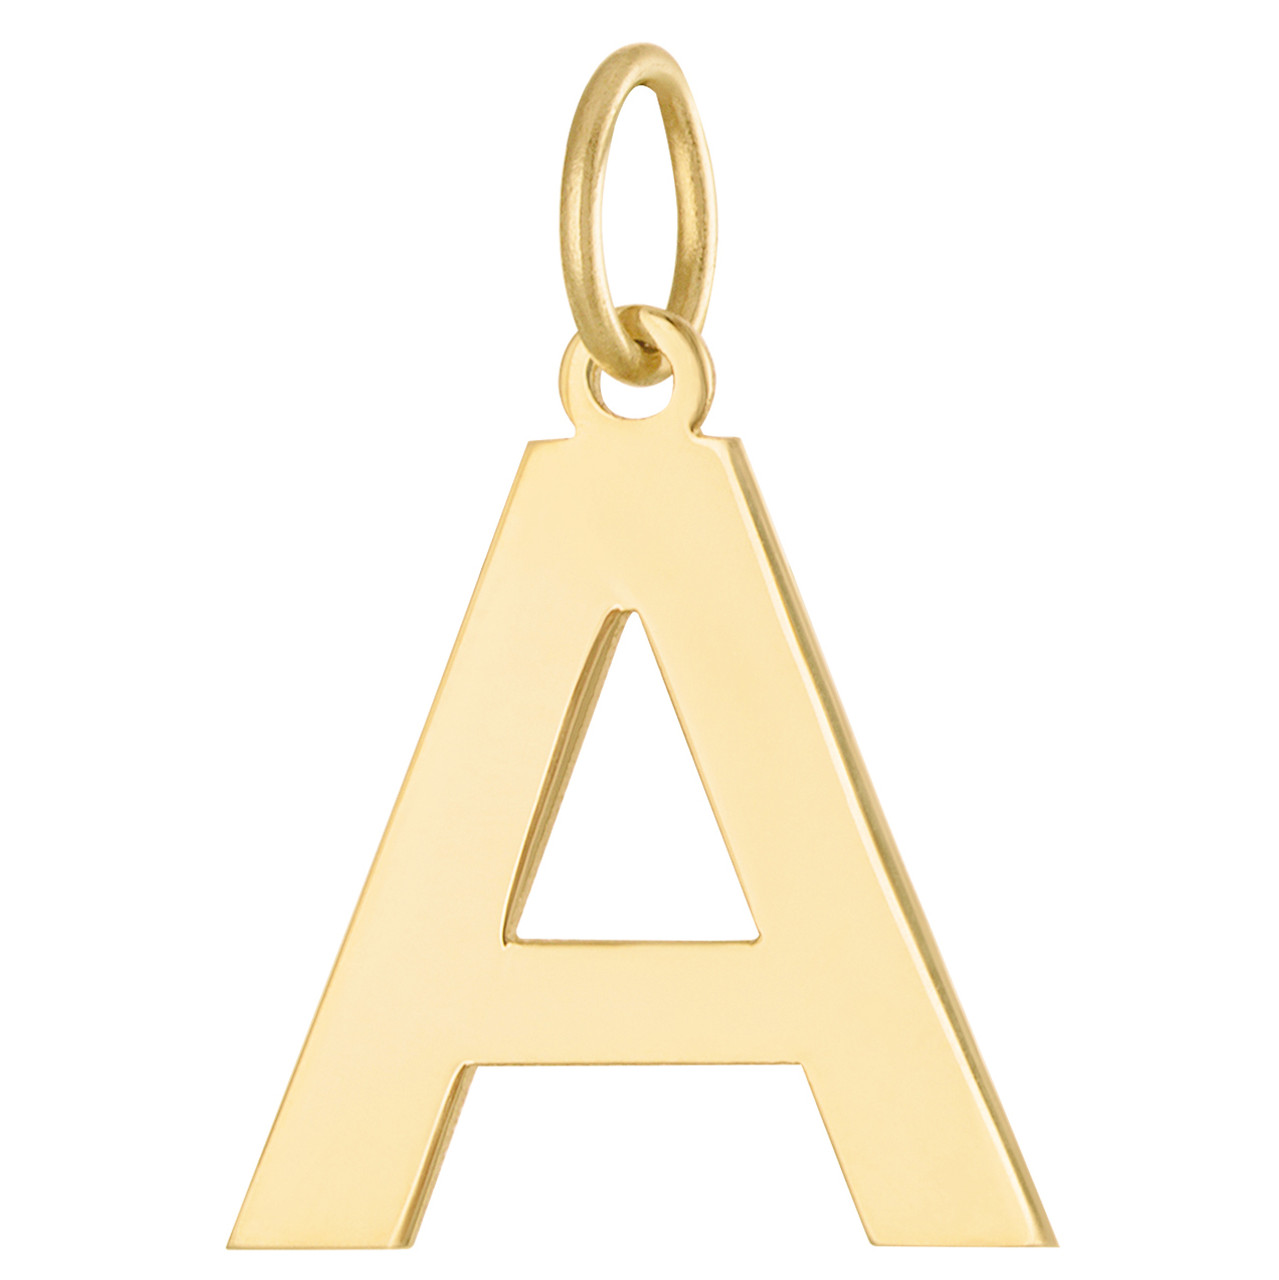 Letter J Necklace - Gold Block Letter Initial Charm